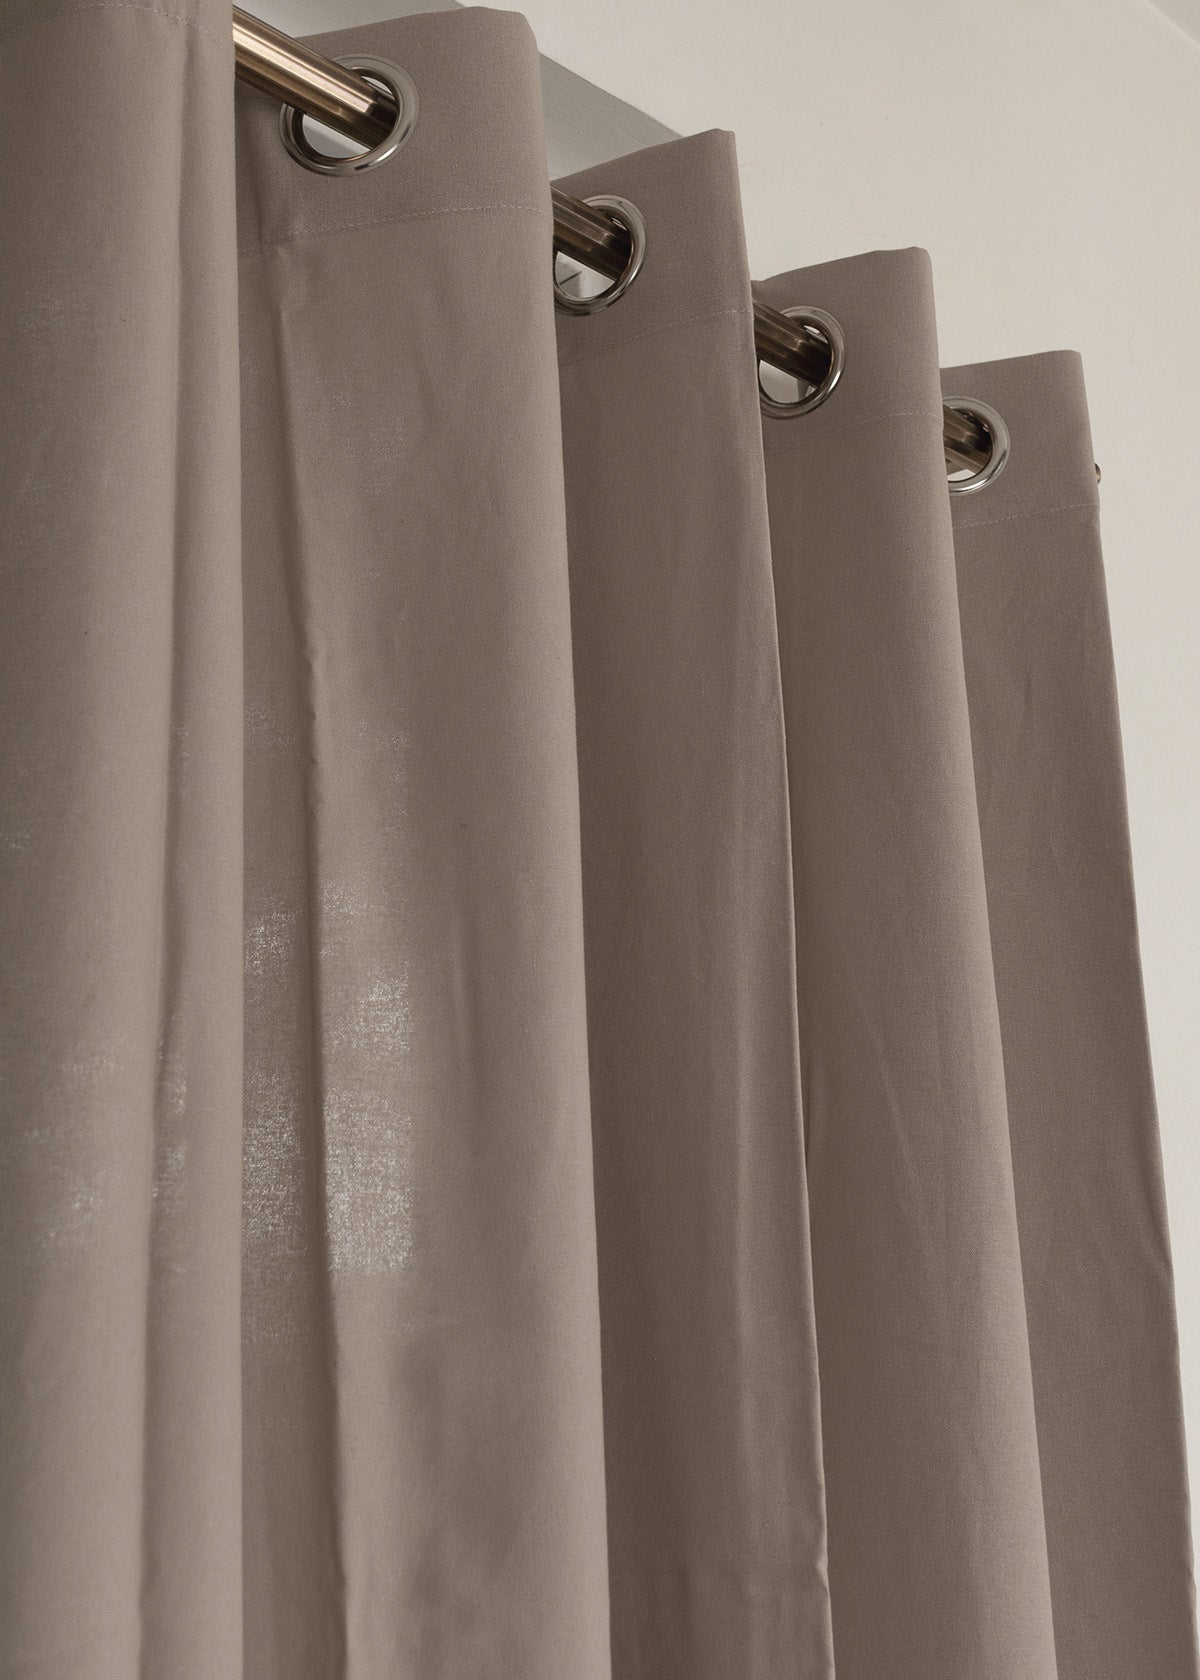 Solid Walnut grey 100% cotton plain curtain for bedroom - Room darkening - Pack of 1